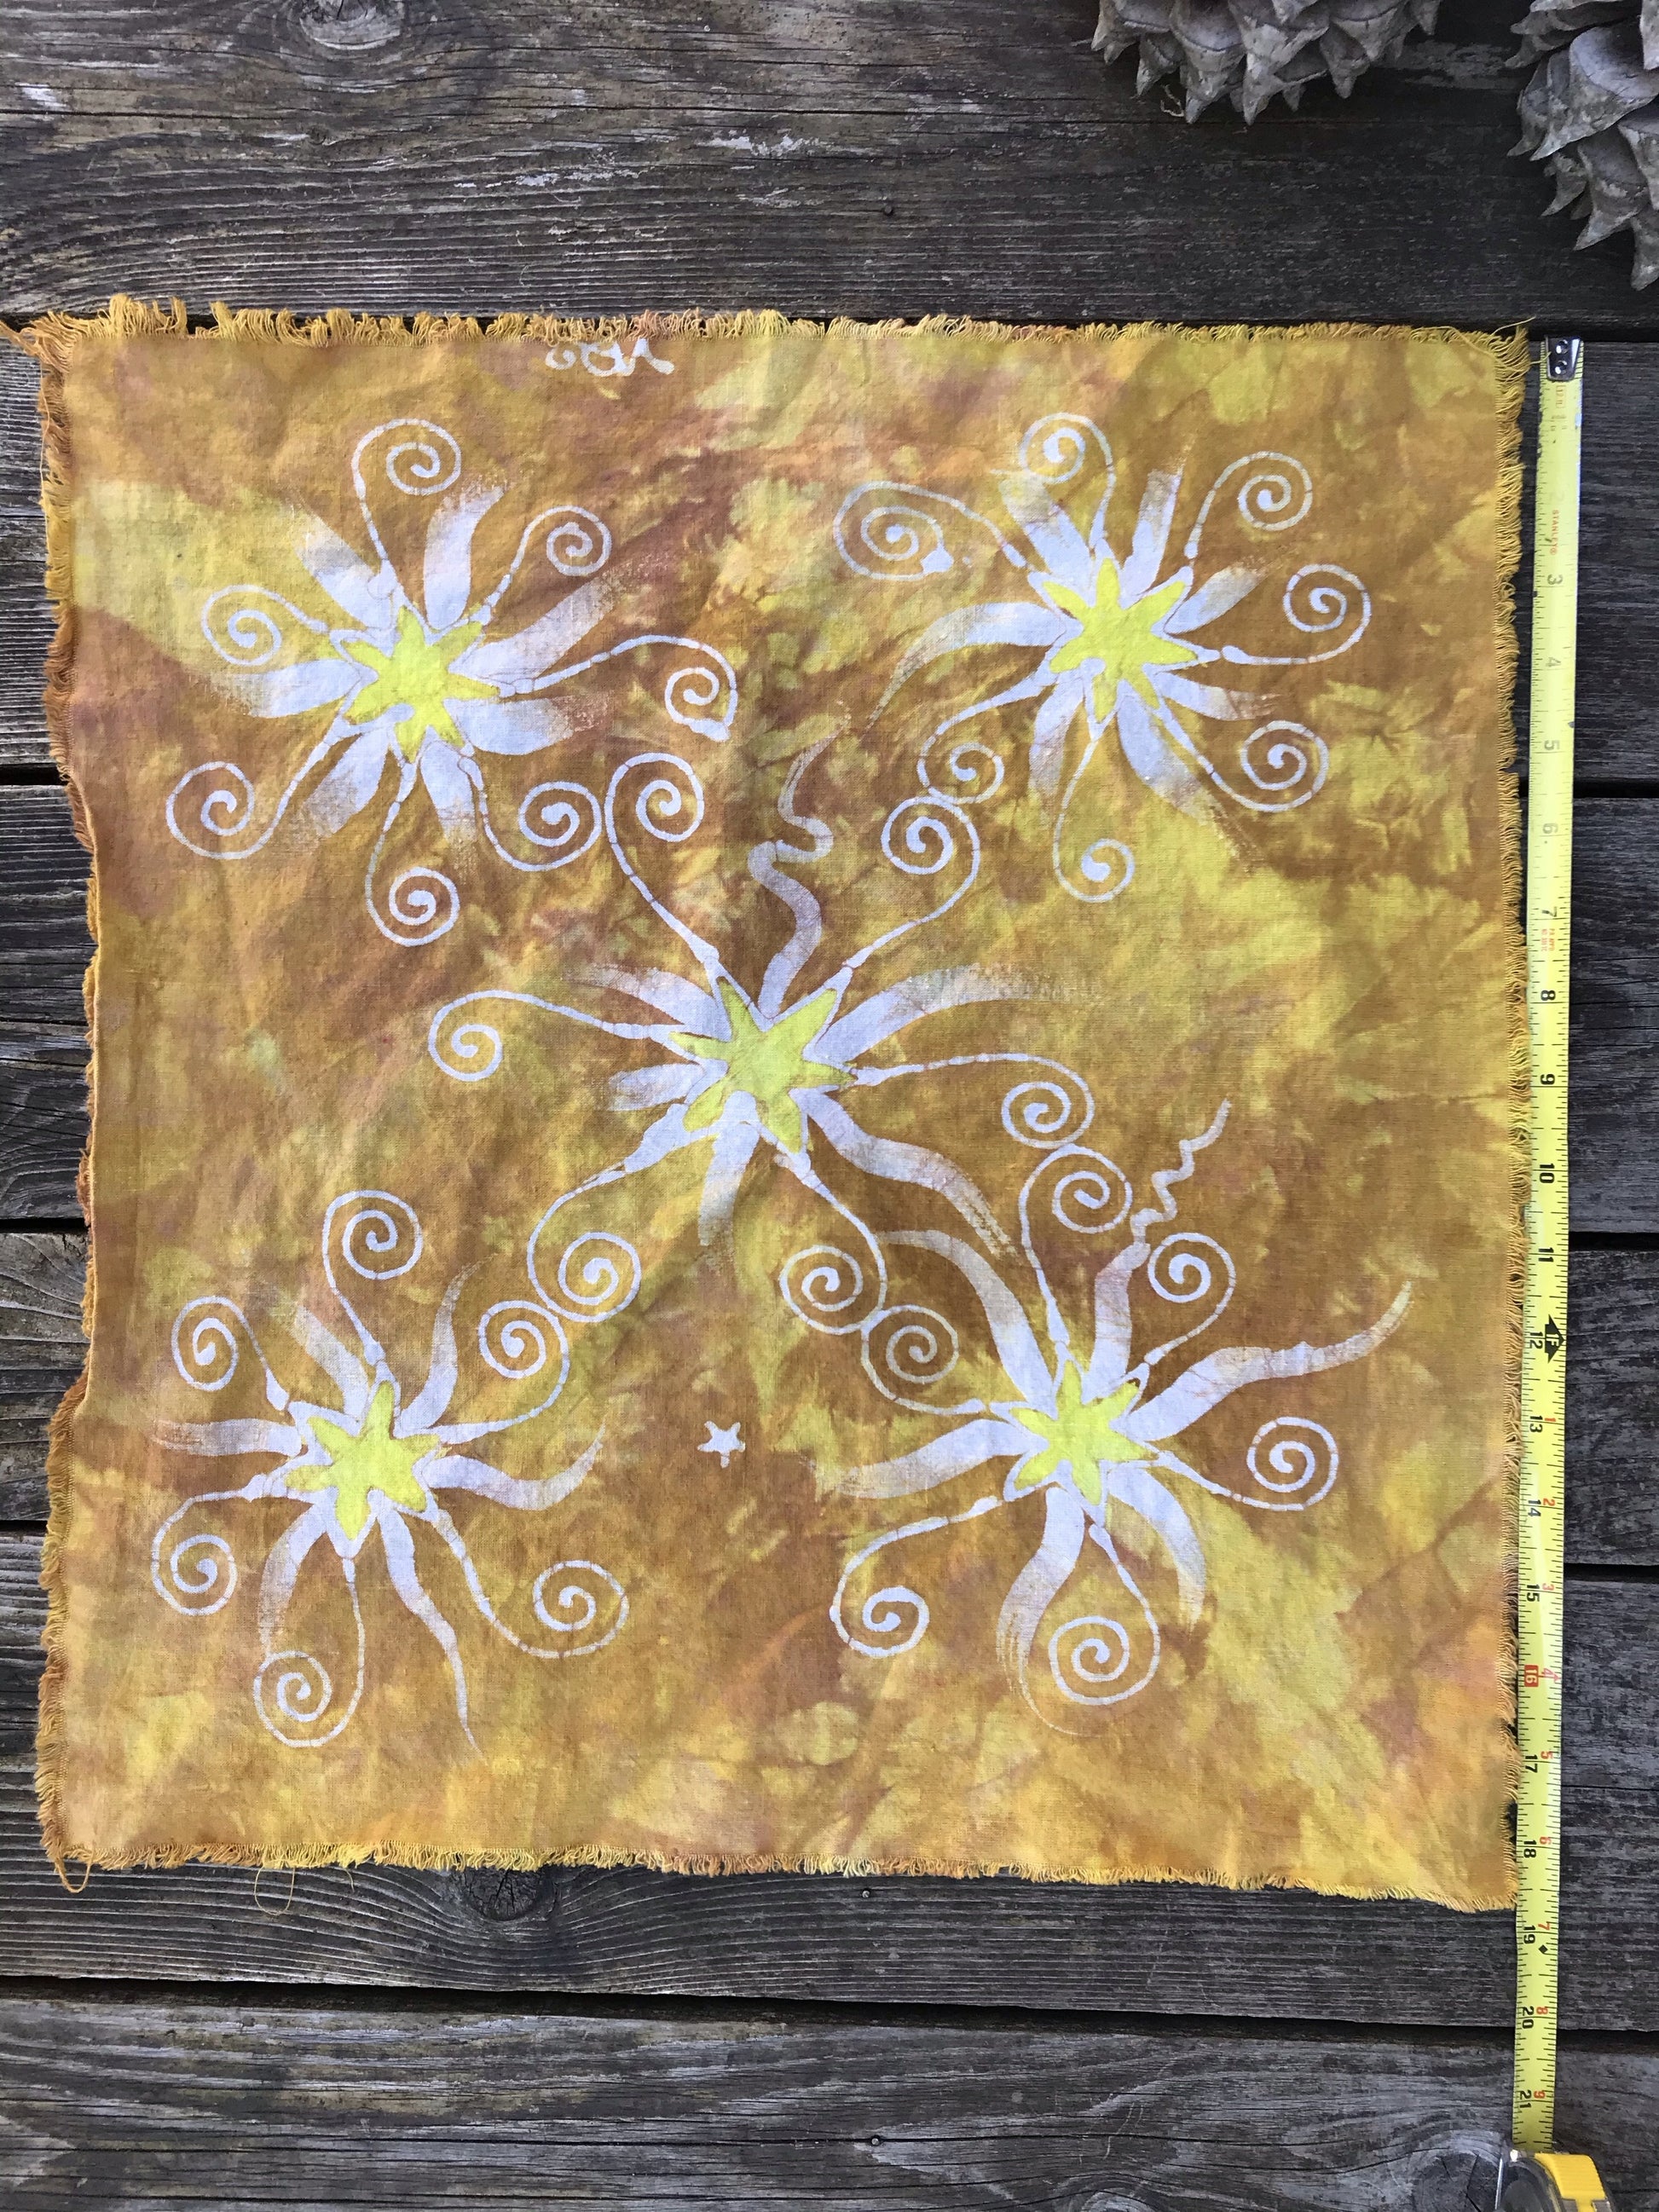 Sunshine Star Batik Bandana - Hand Painted Cotton Fabric Square scarf batikwalla 